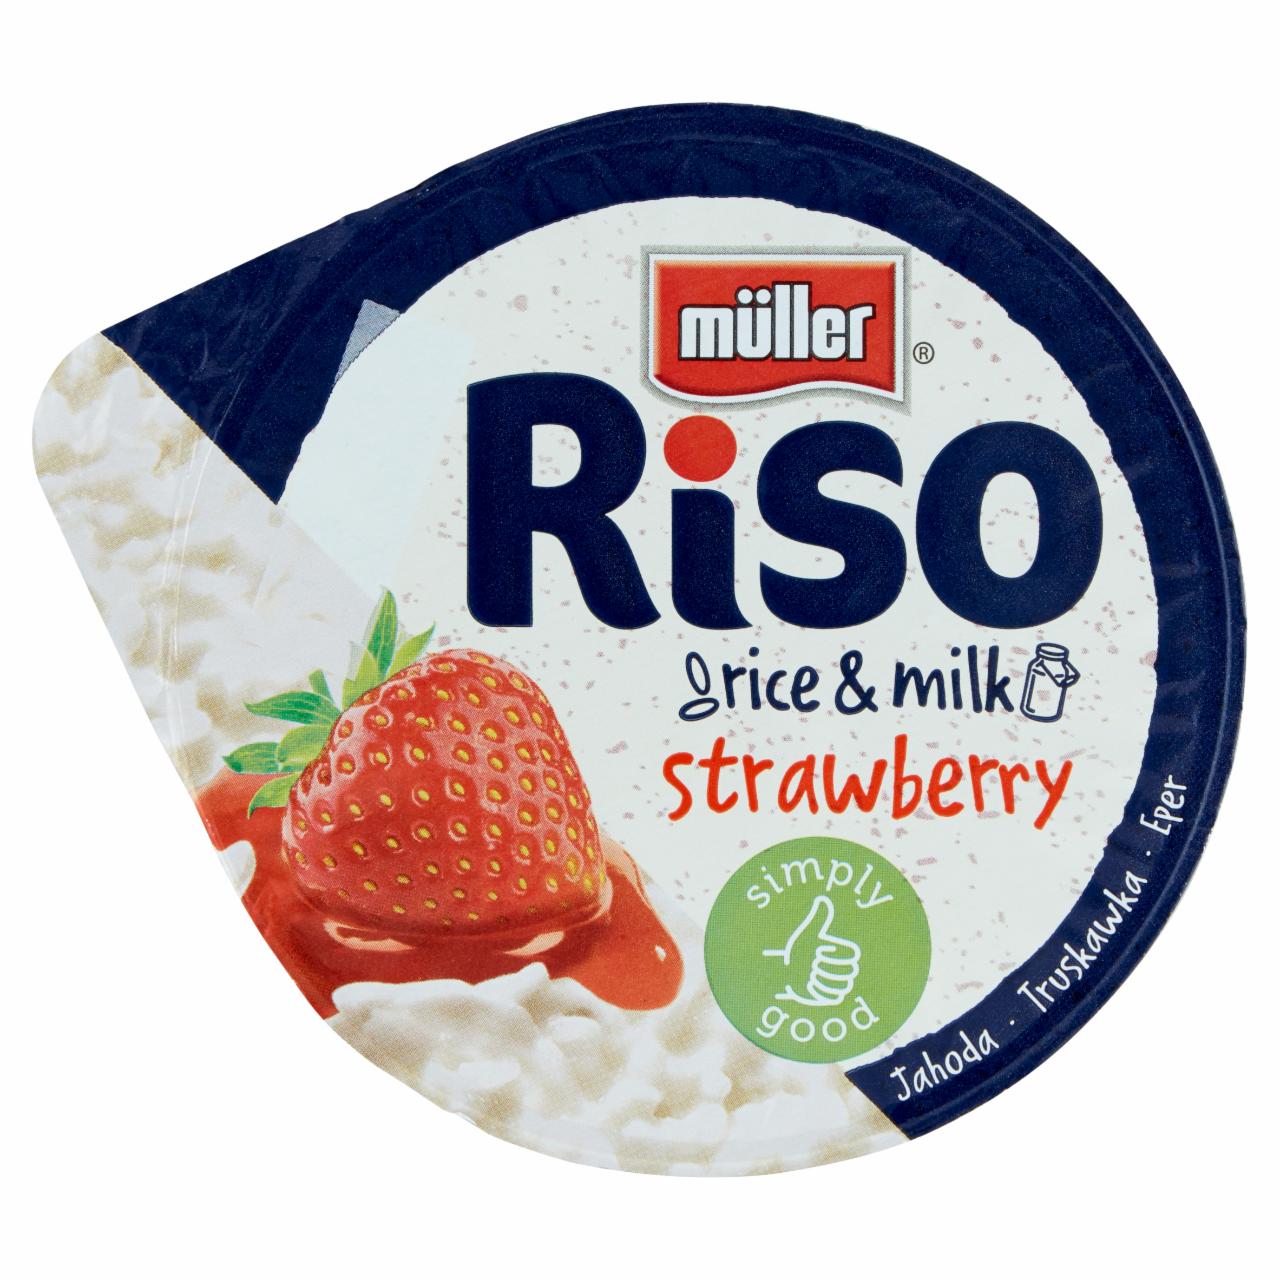 Zdjęcia - Riso rice & milk Strawberry Müller